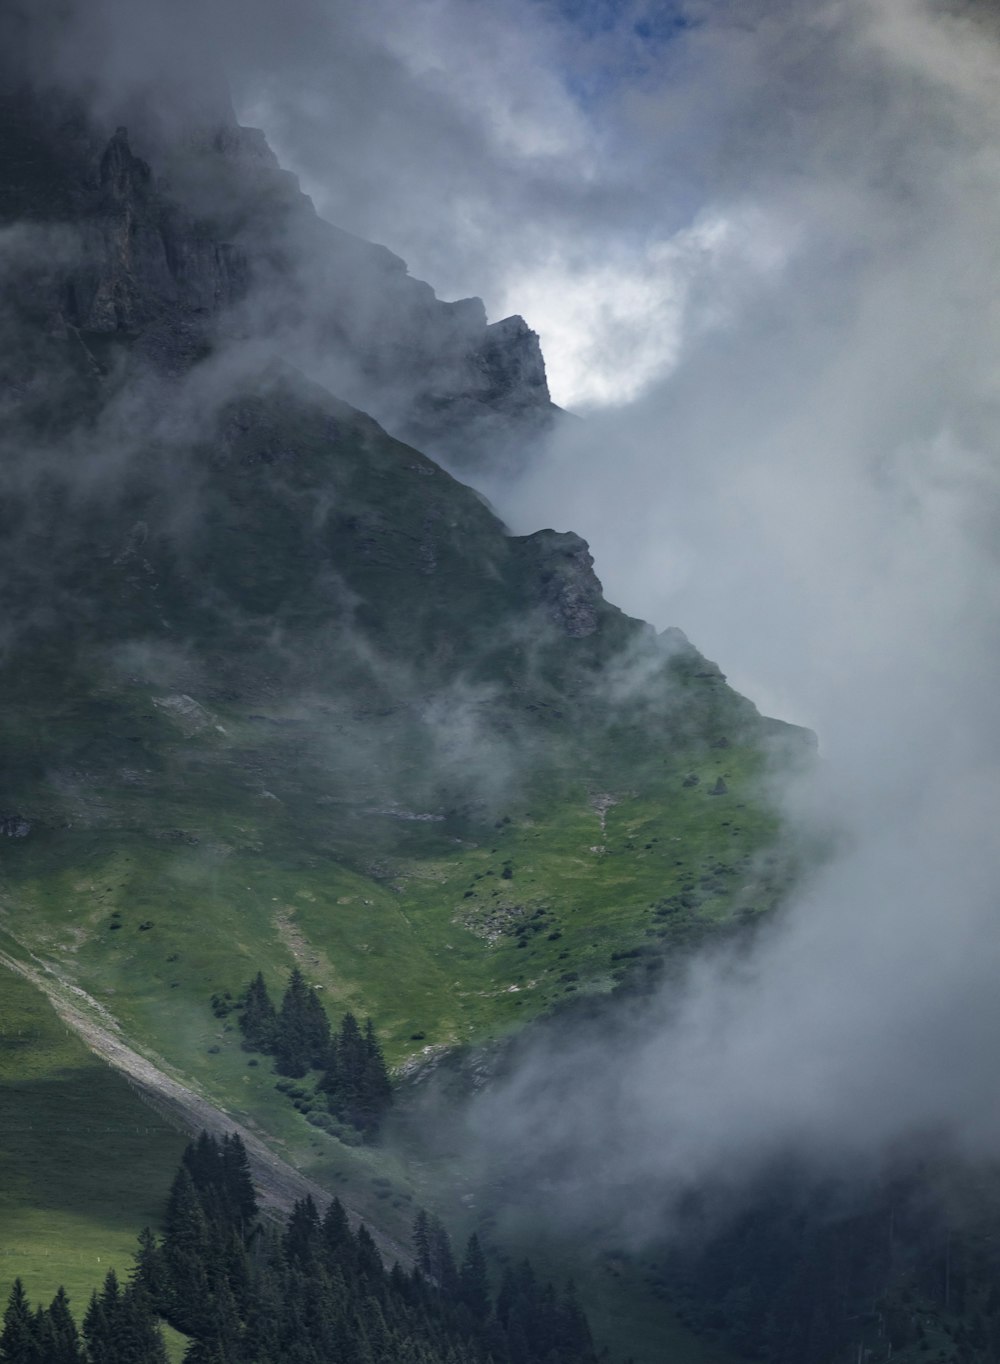 Grüner Berg in Nebel gehüllt